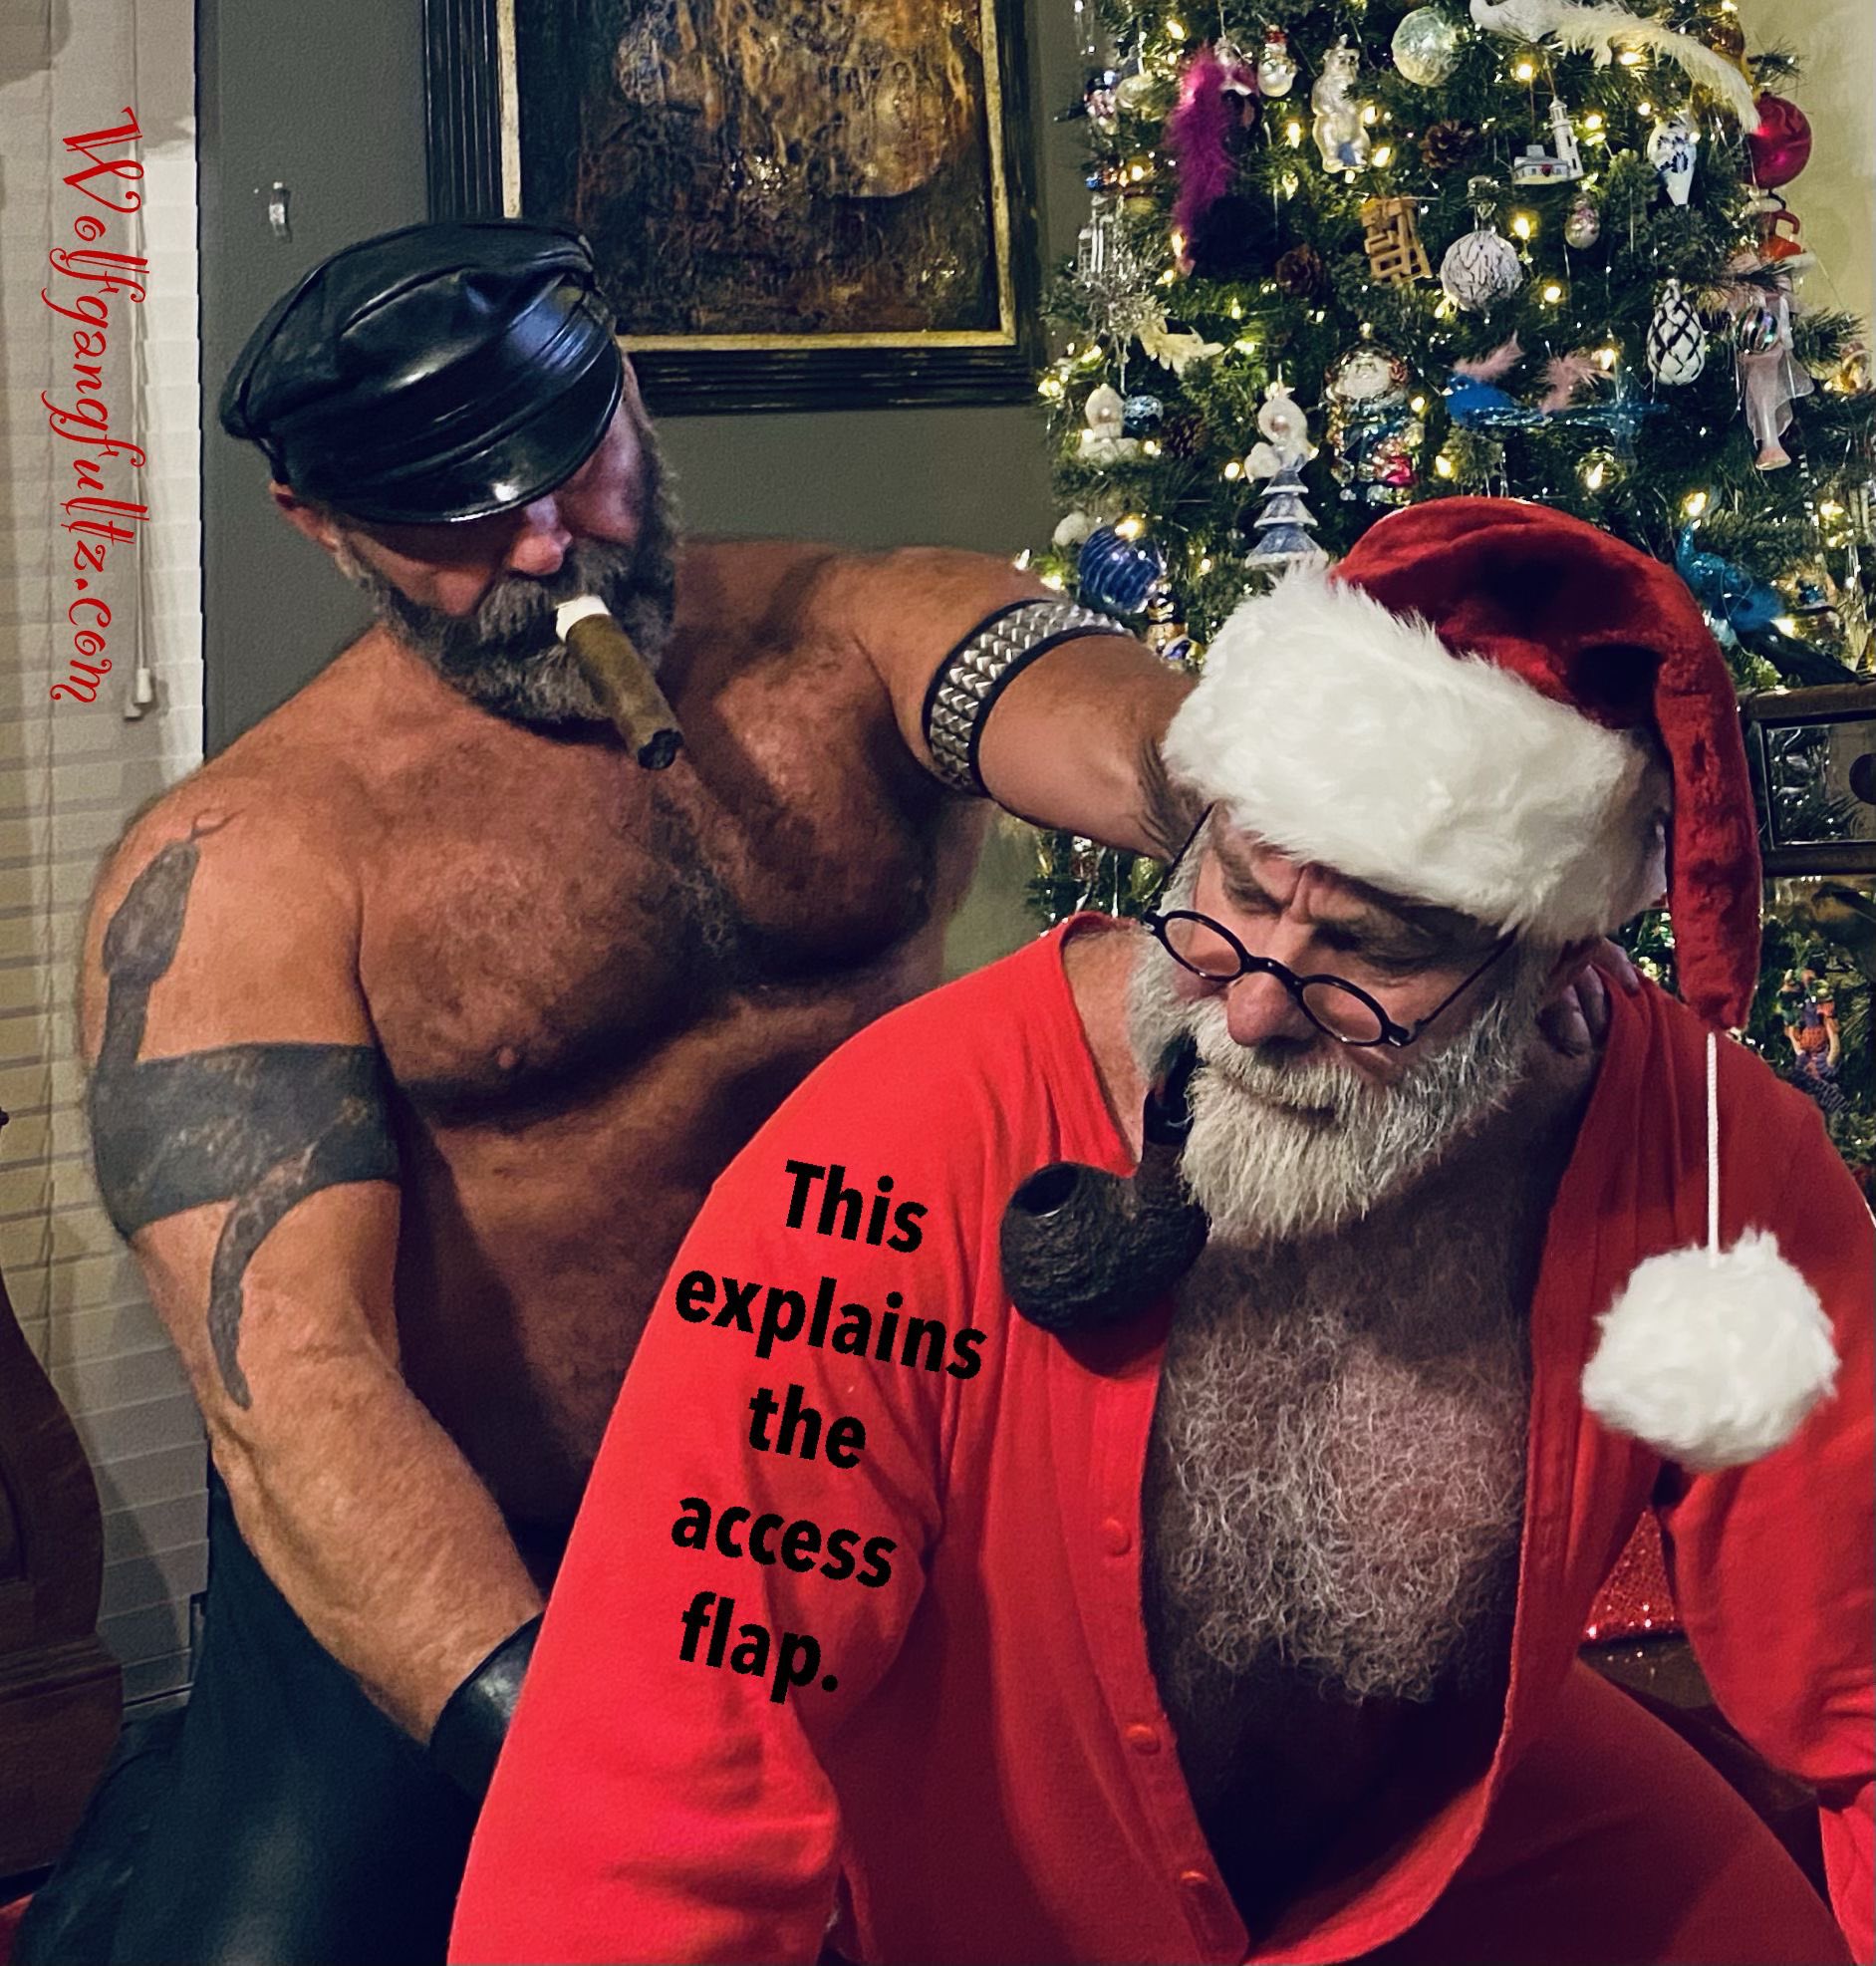 Hairy cigar daddy gives Sexy Santa a sample of his naughty. More @ https://t.co/jV2bQ5Pxqb #naughty #Sexysanta